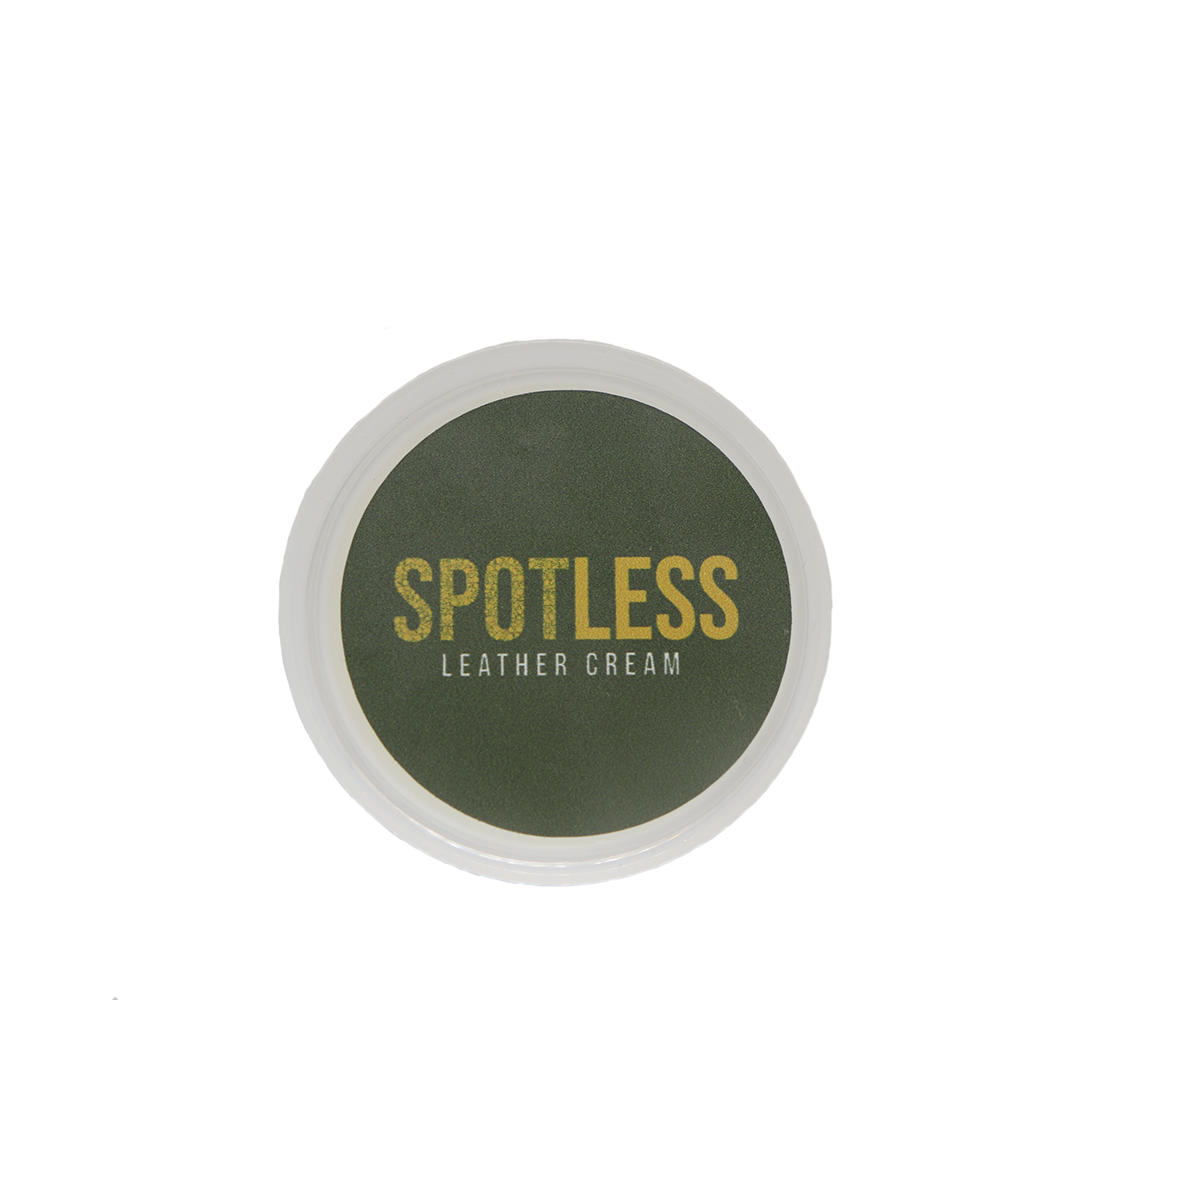 Spotless Leather Cream